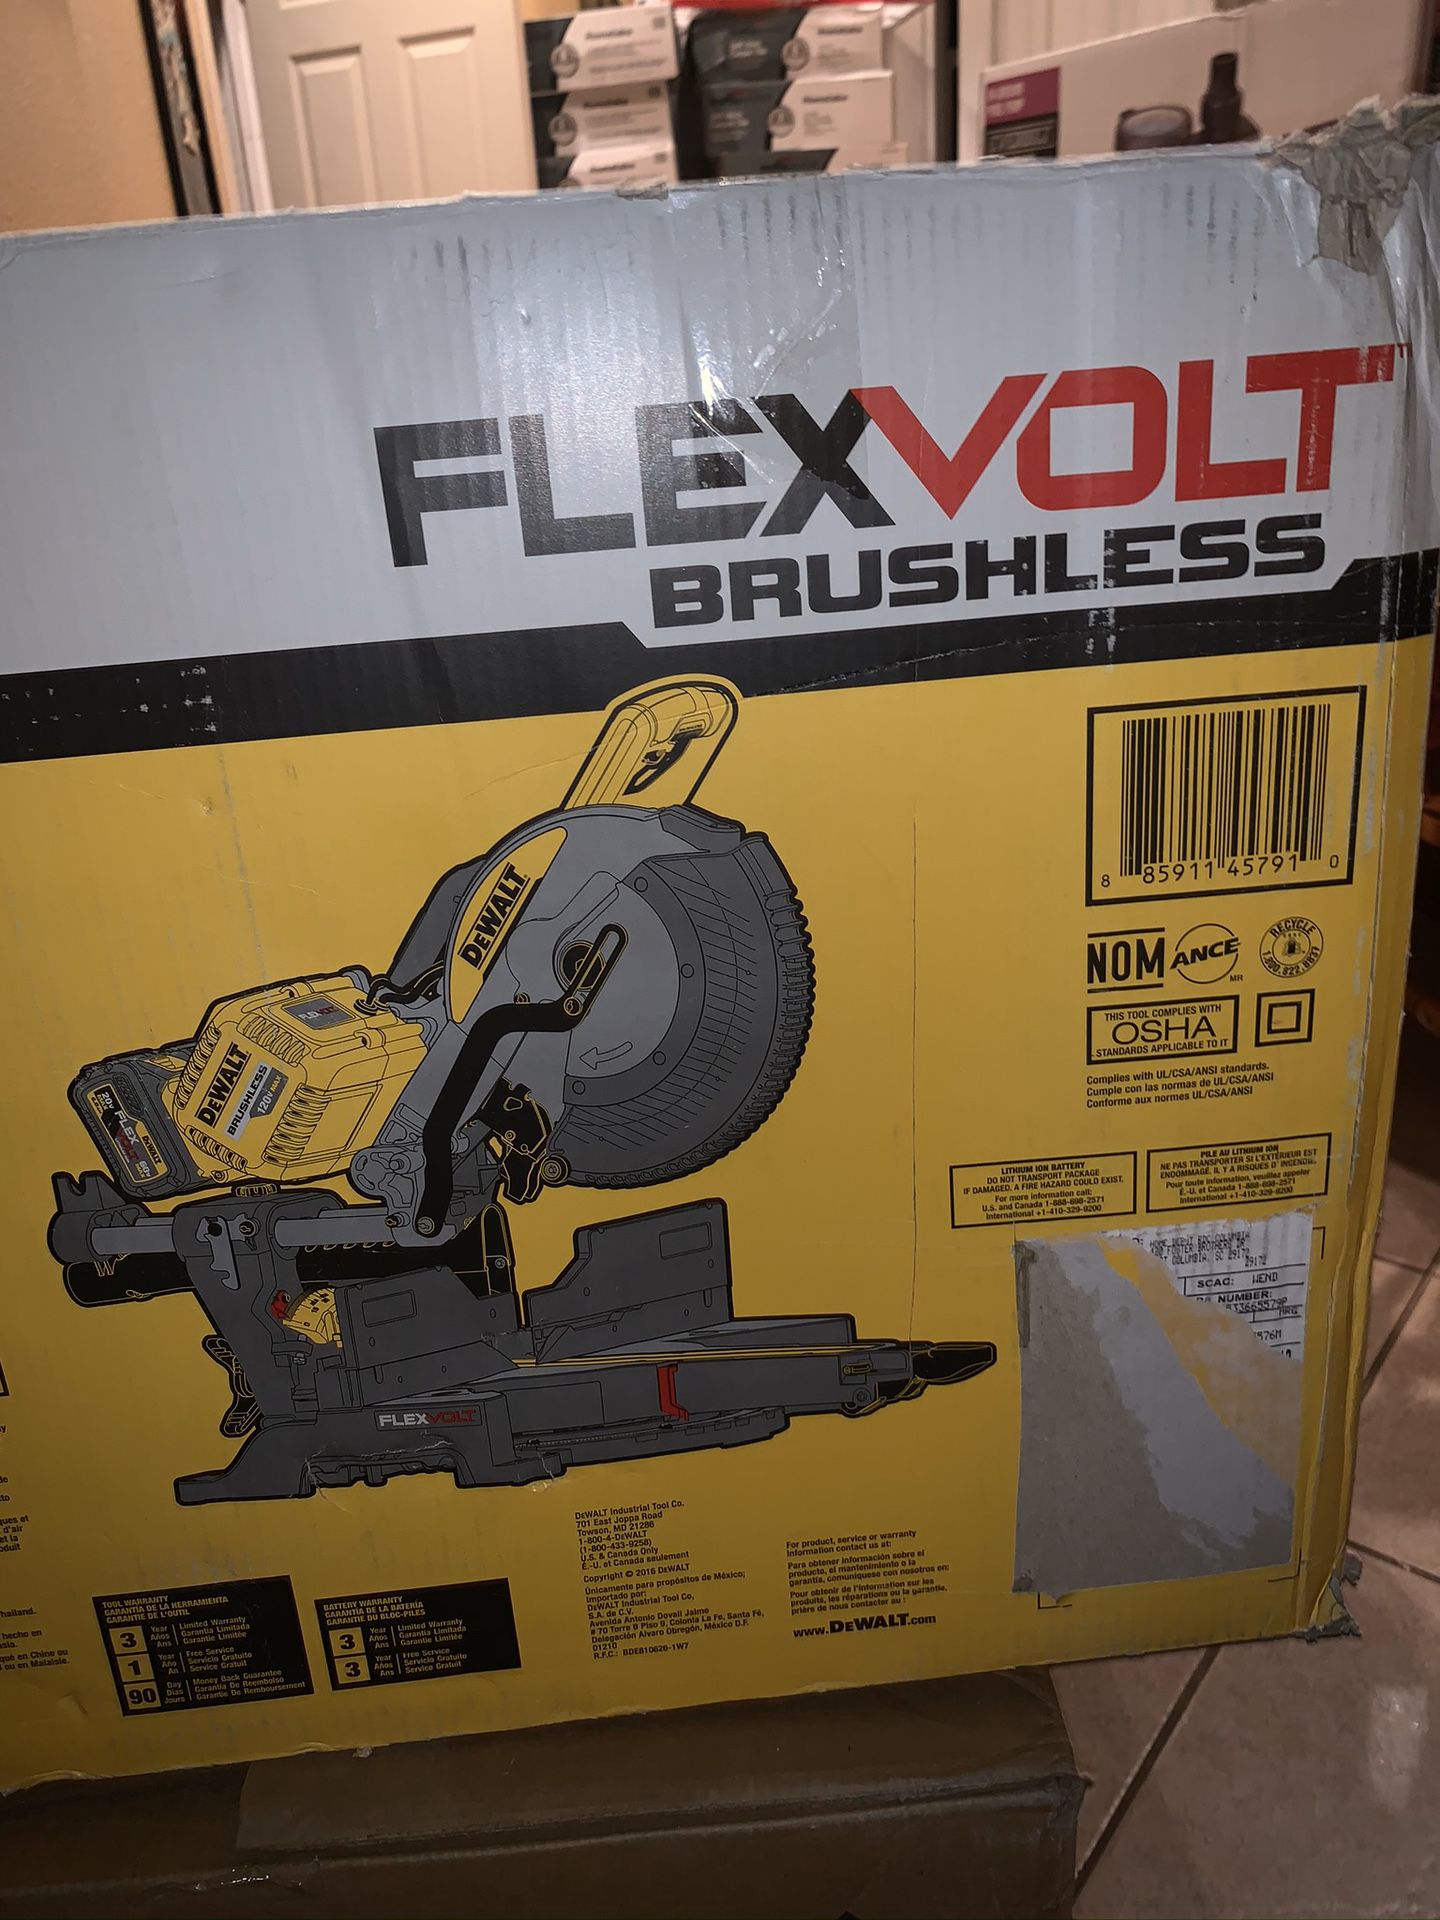 Brand new 12” sliding dewalt flexvolt miter saw with power pack ( no)batteries model